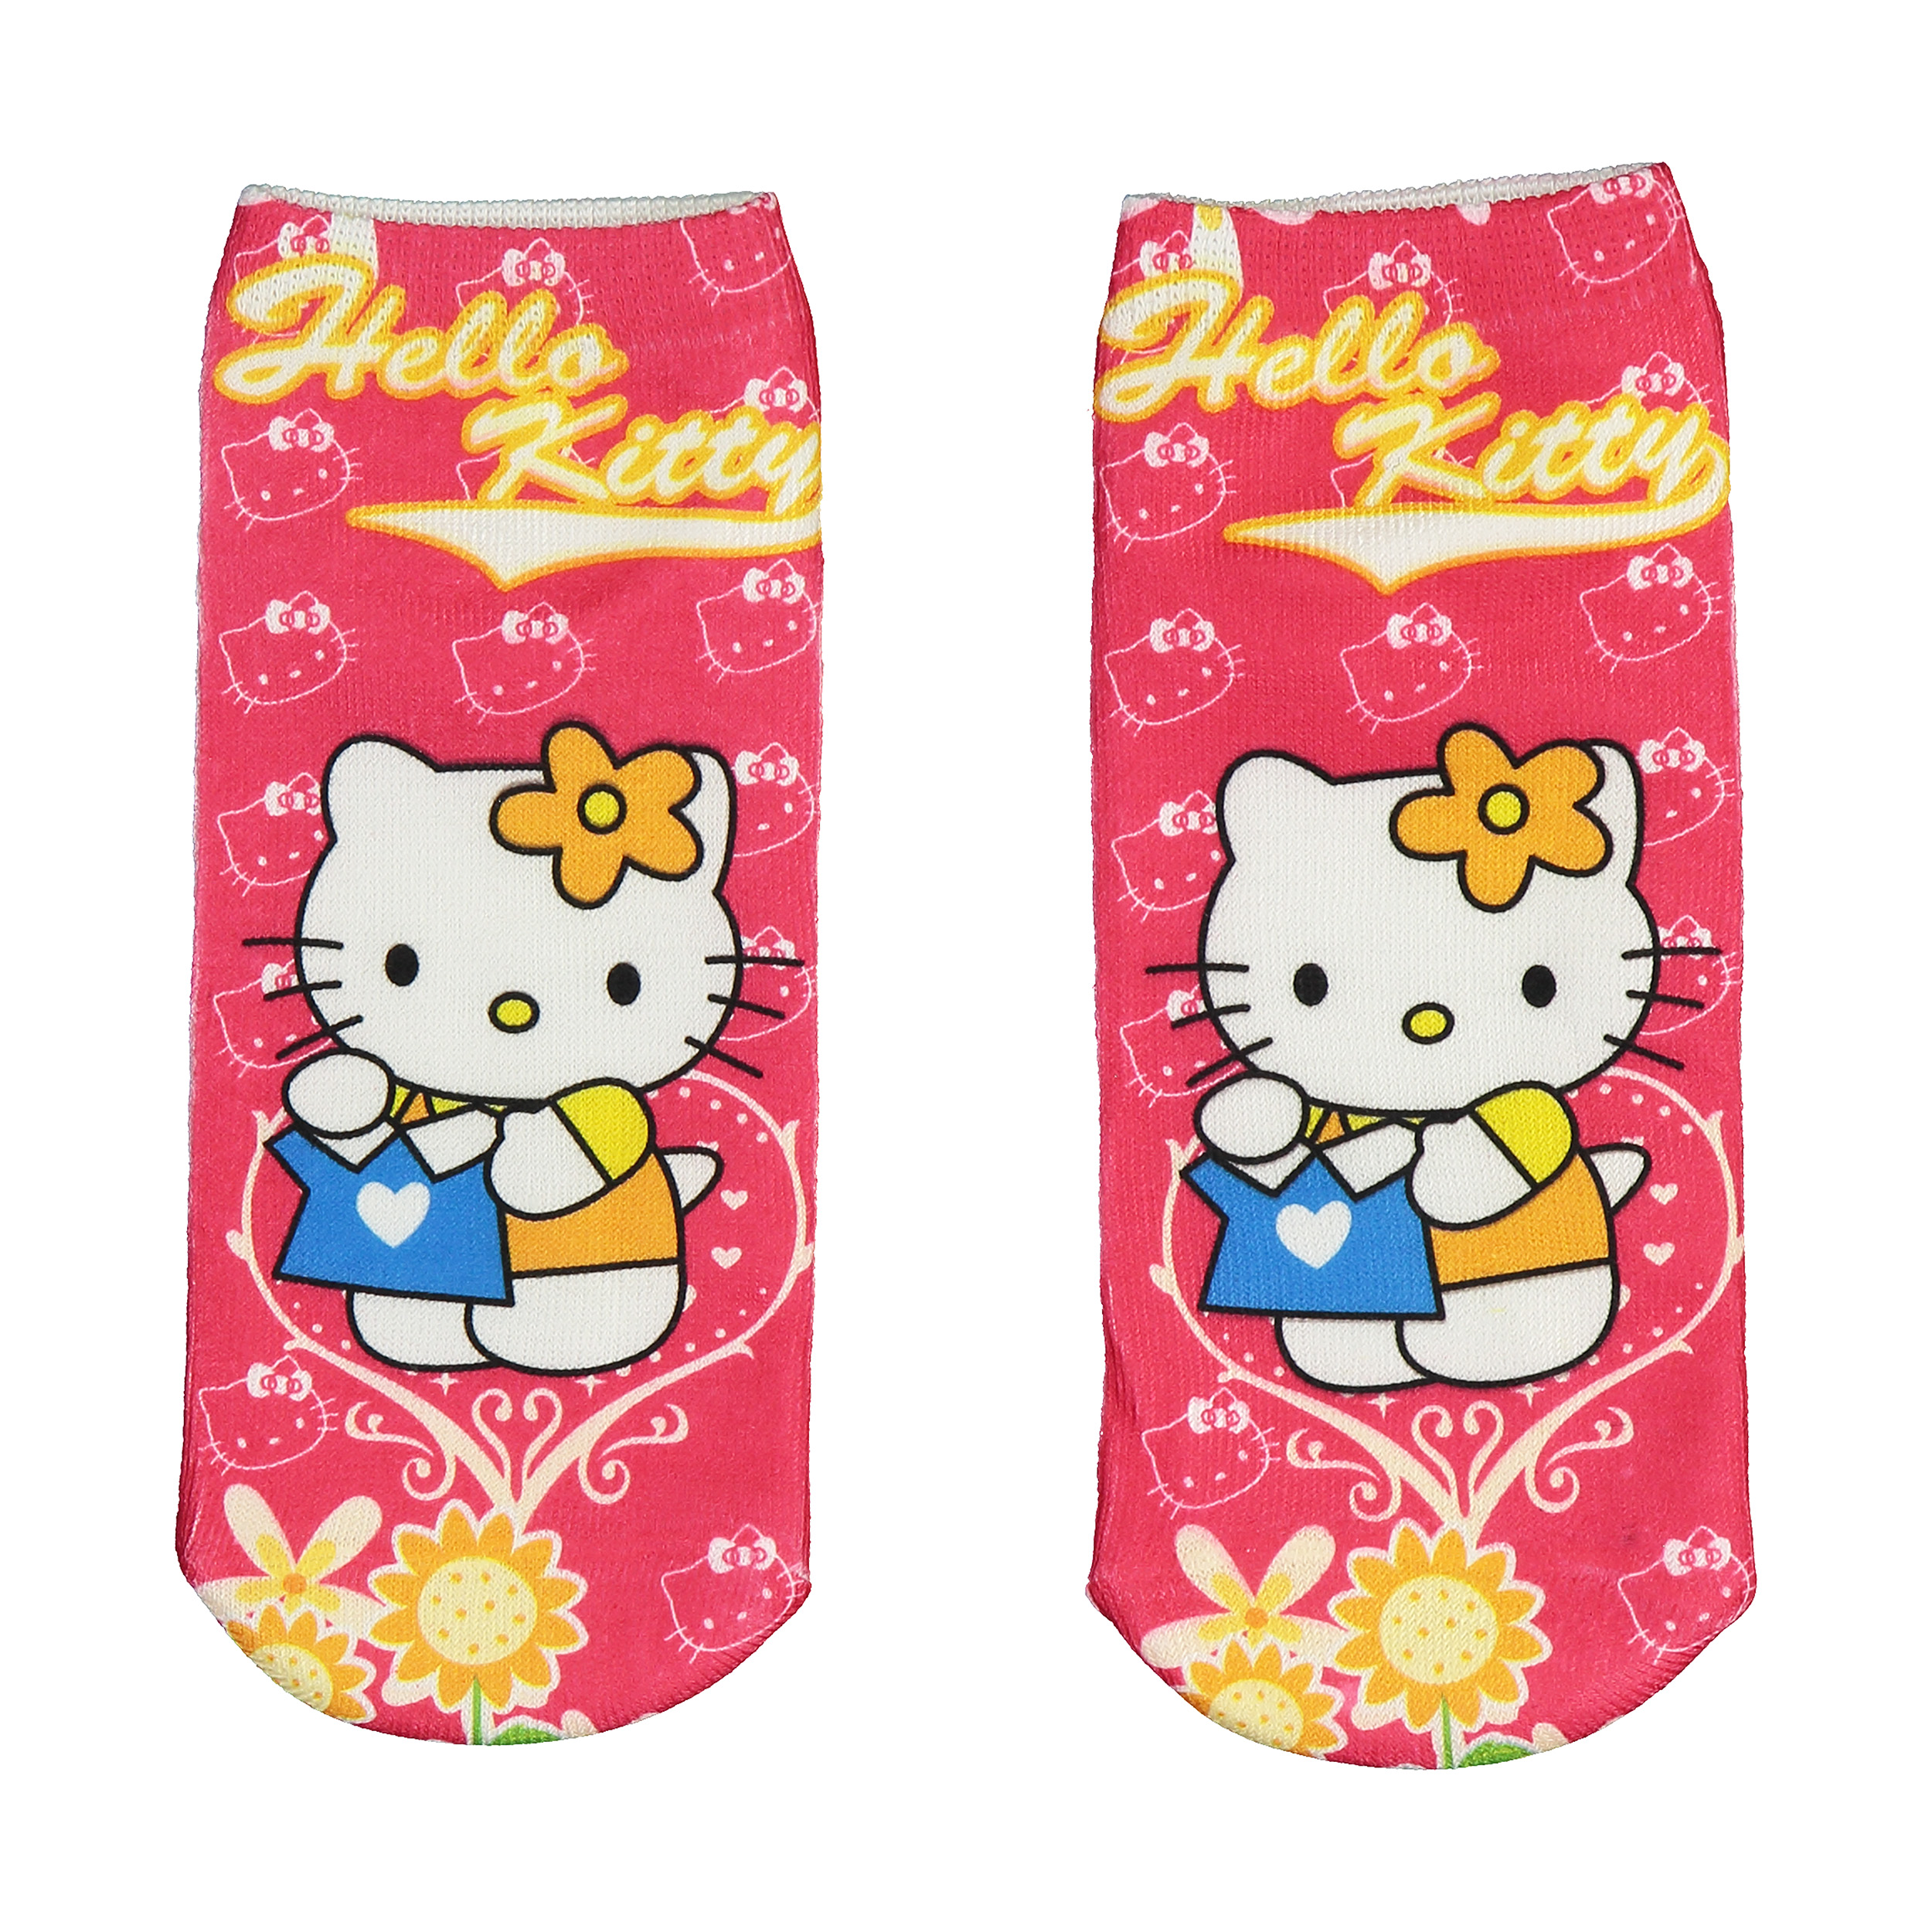 جوراب طرح Hello Kitty 2